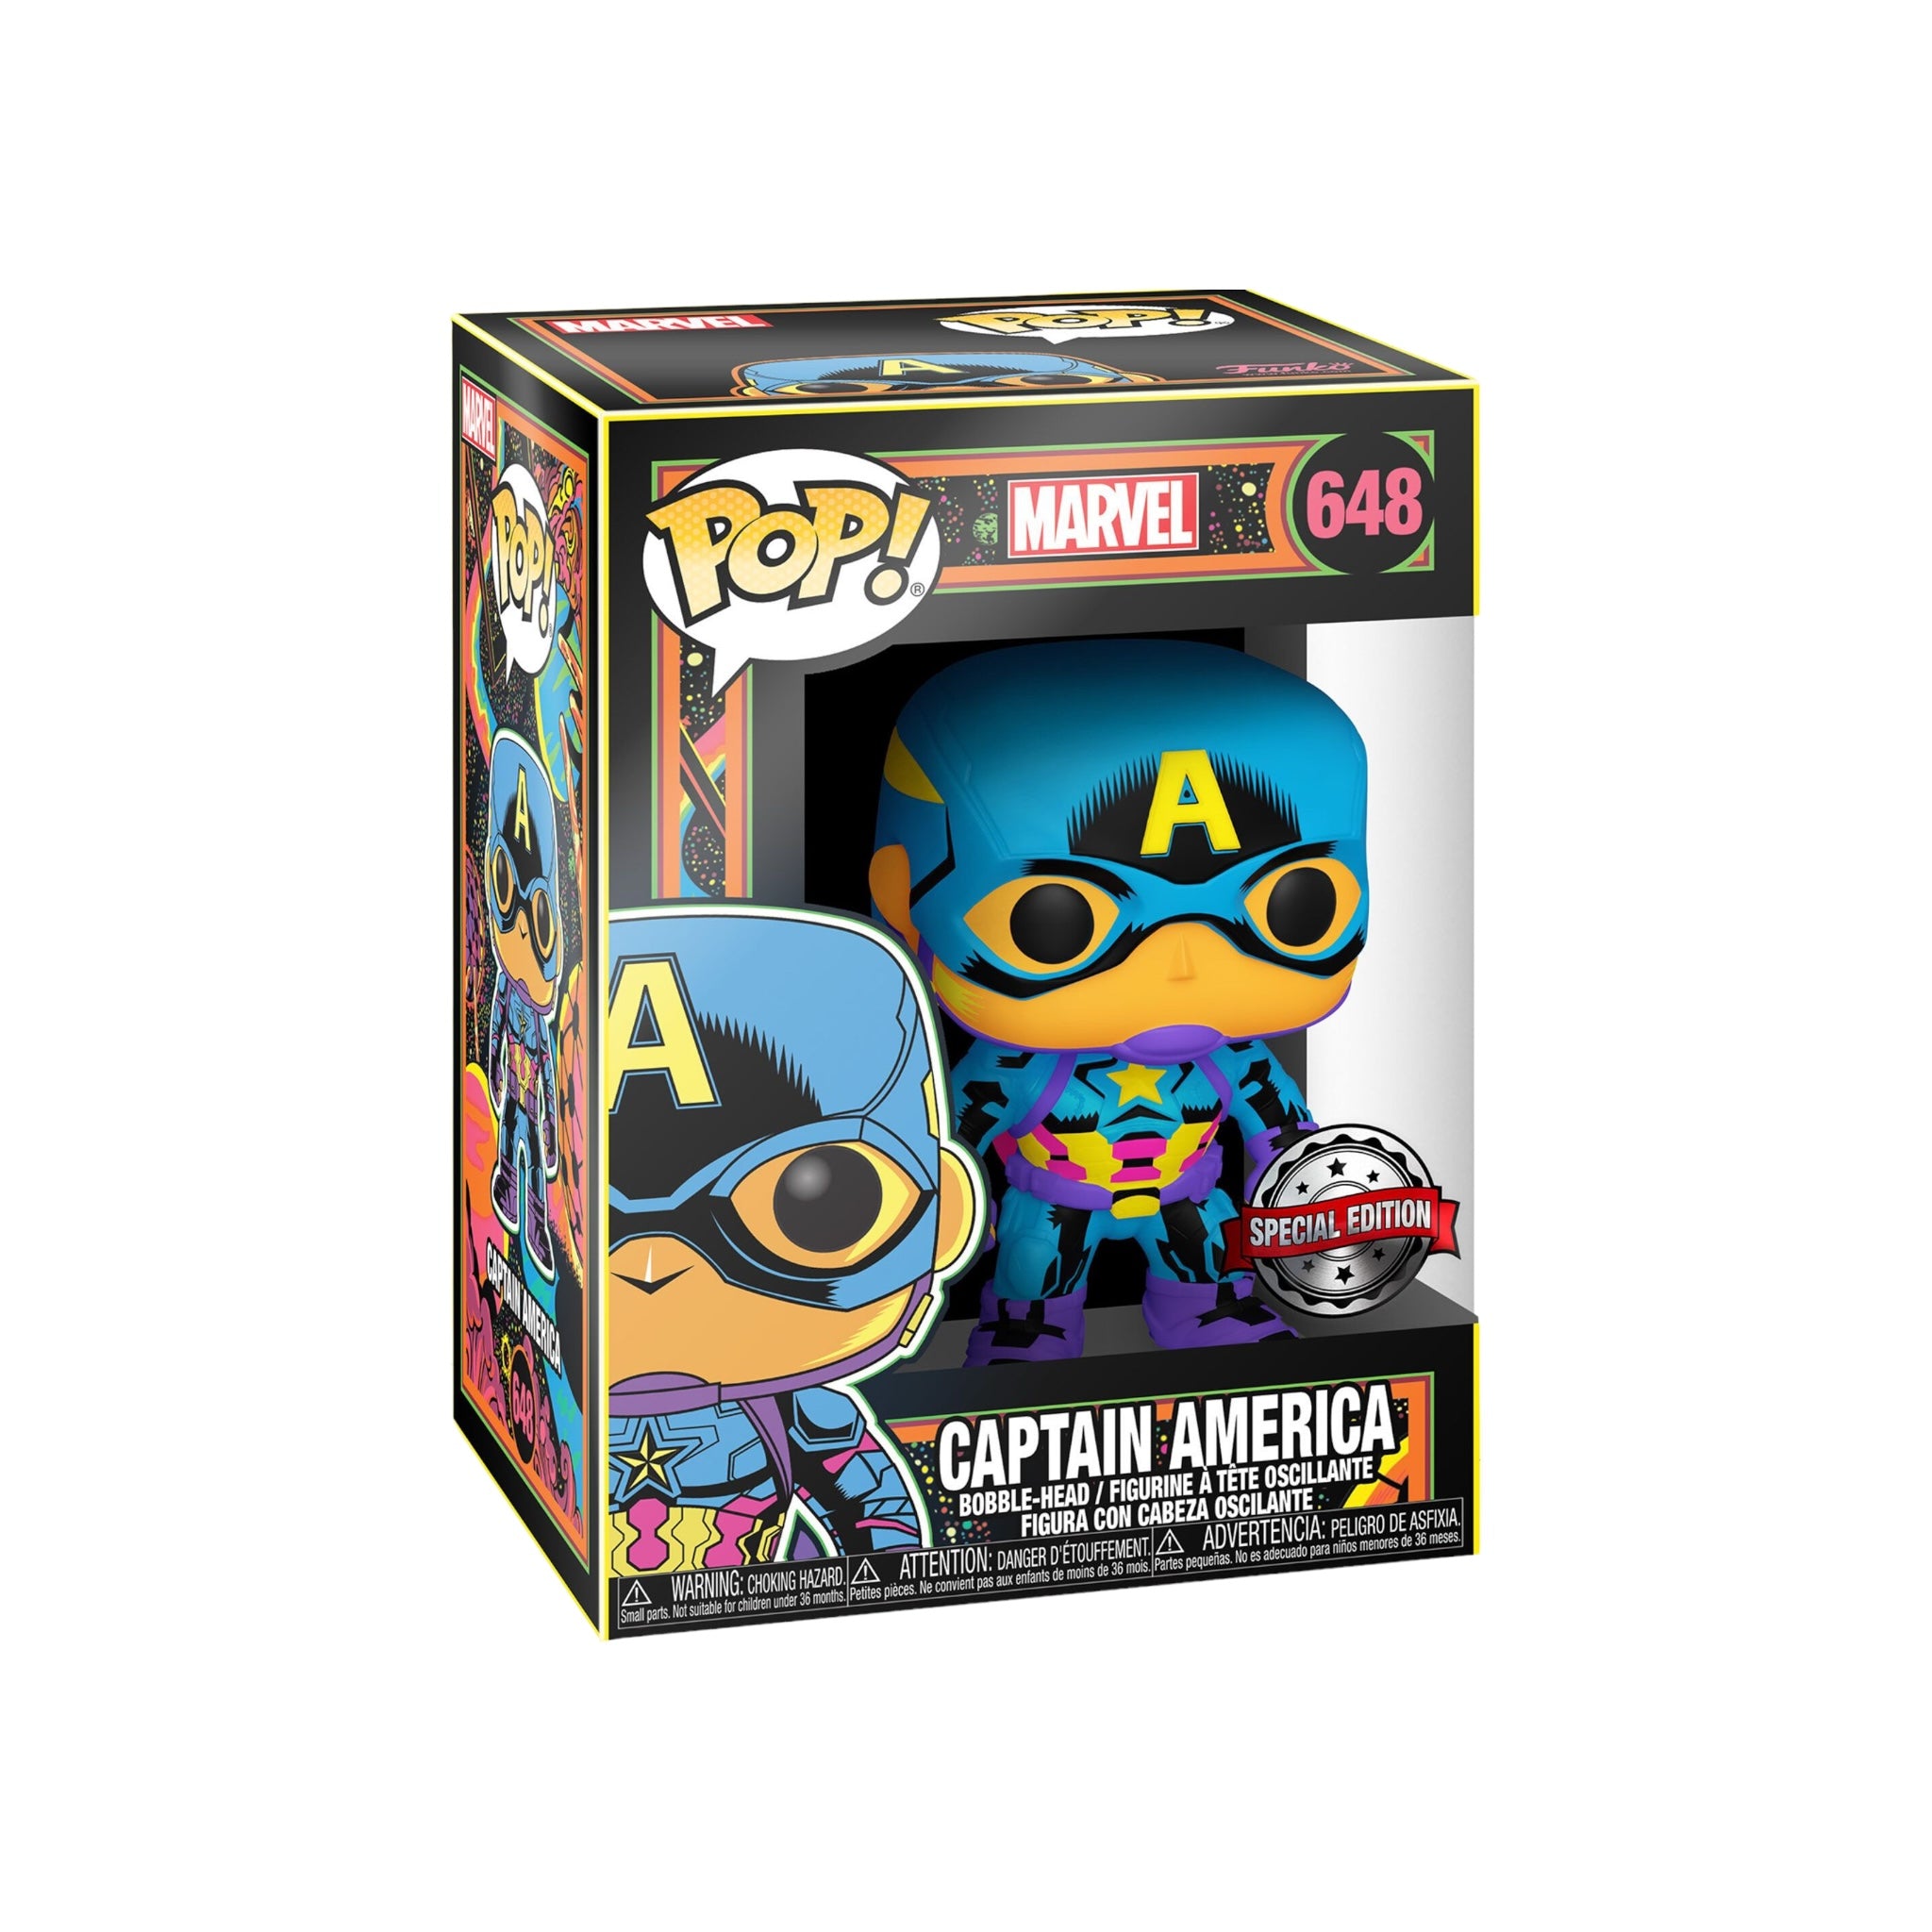 Captain America #648 (Black Light) Funko Pop! - Marvel - Special Edition